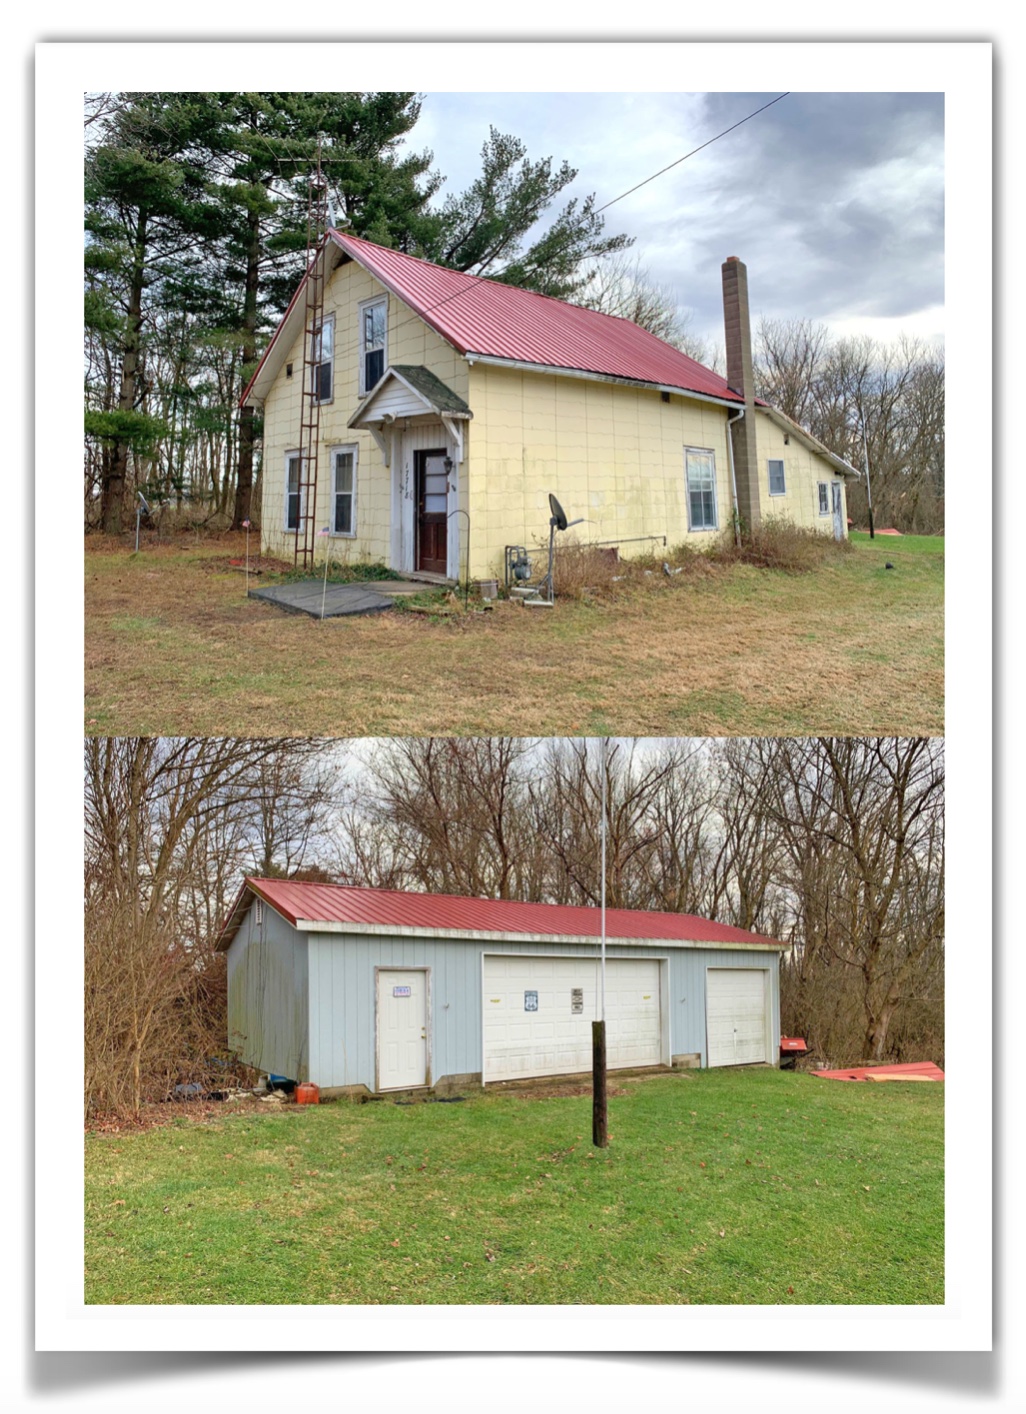 Mount Vernon Ohio Country Fixer Upper Home for $75 000